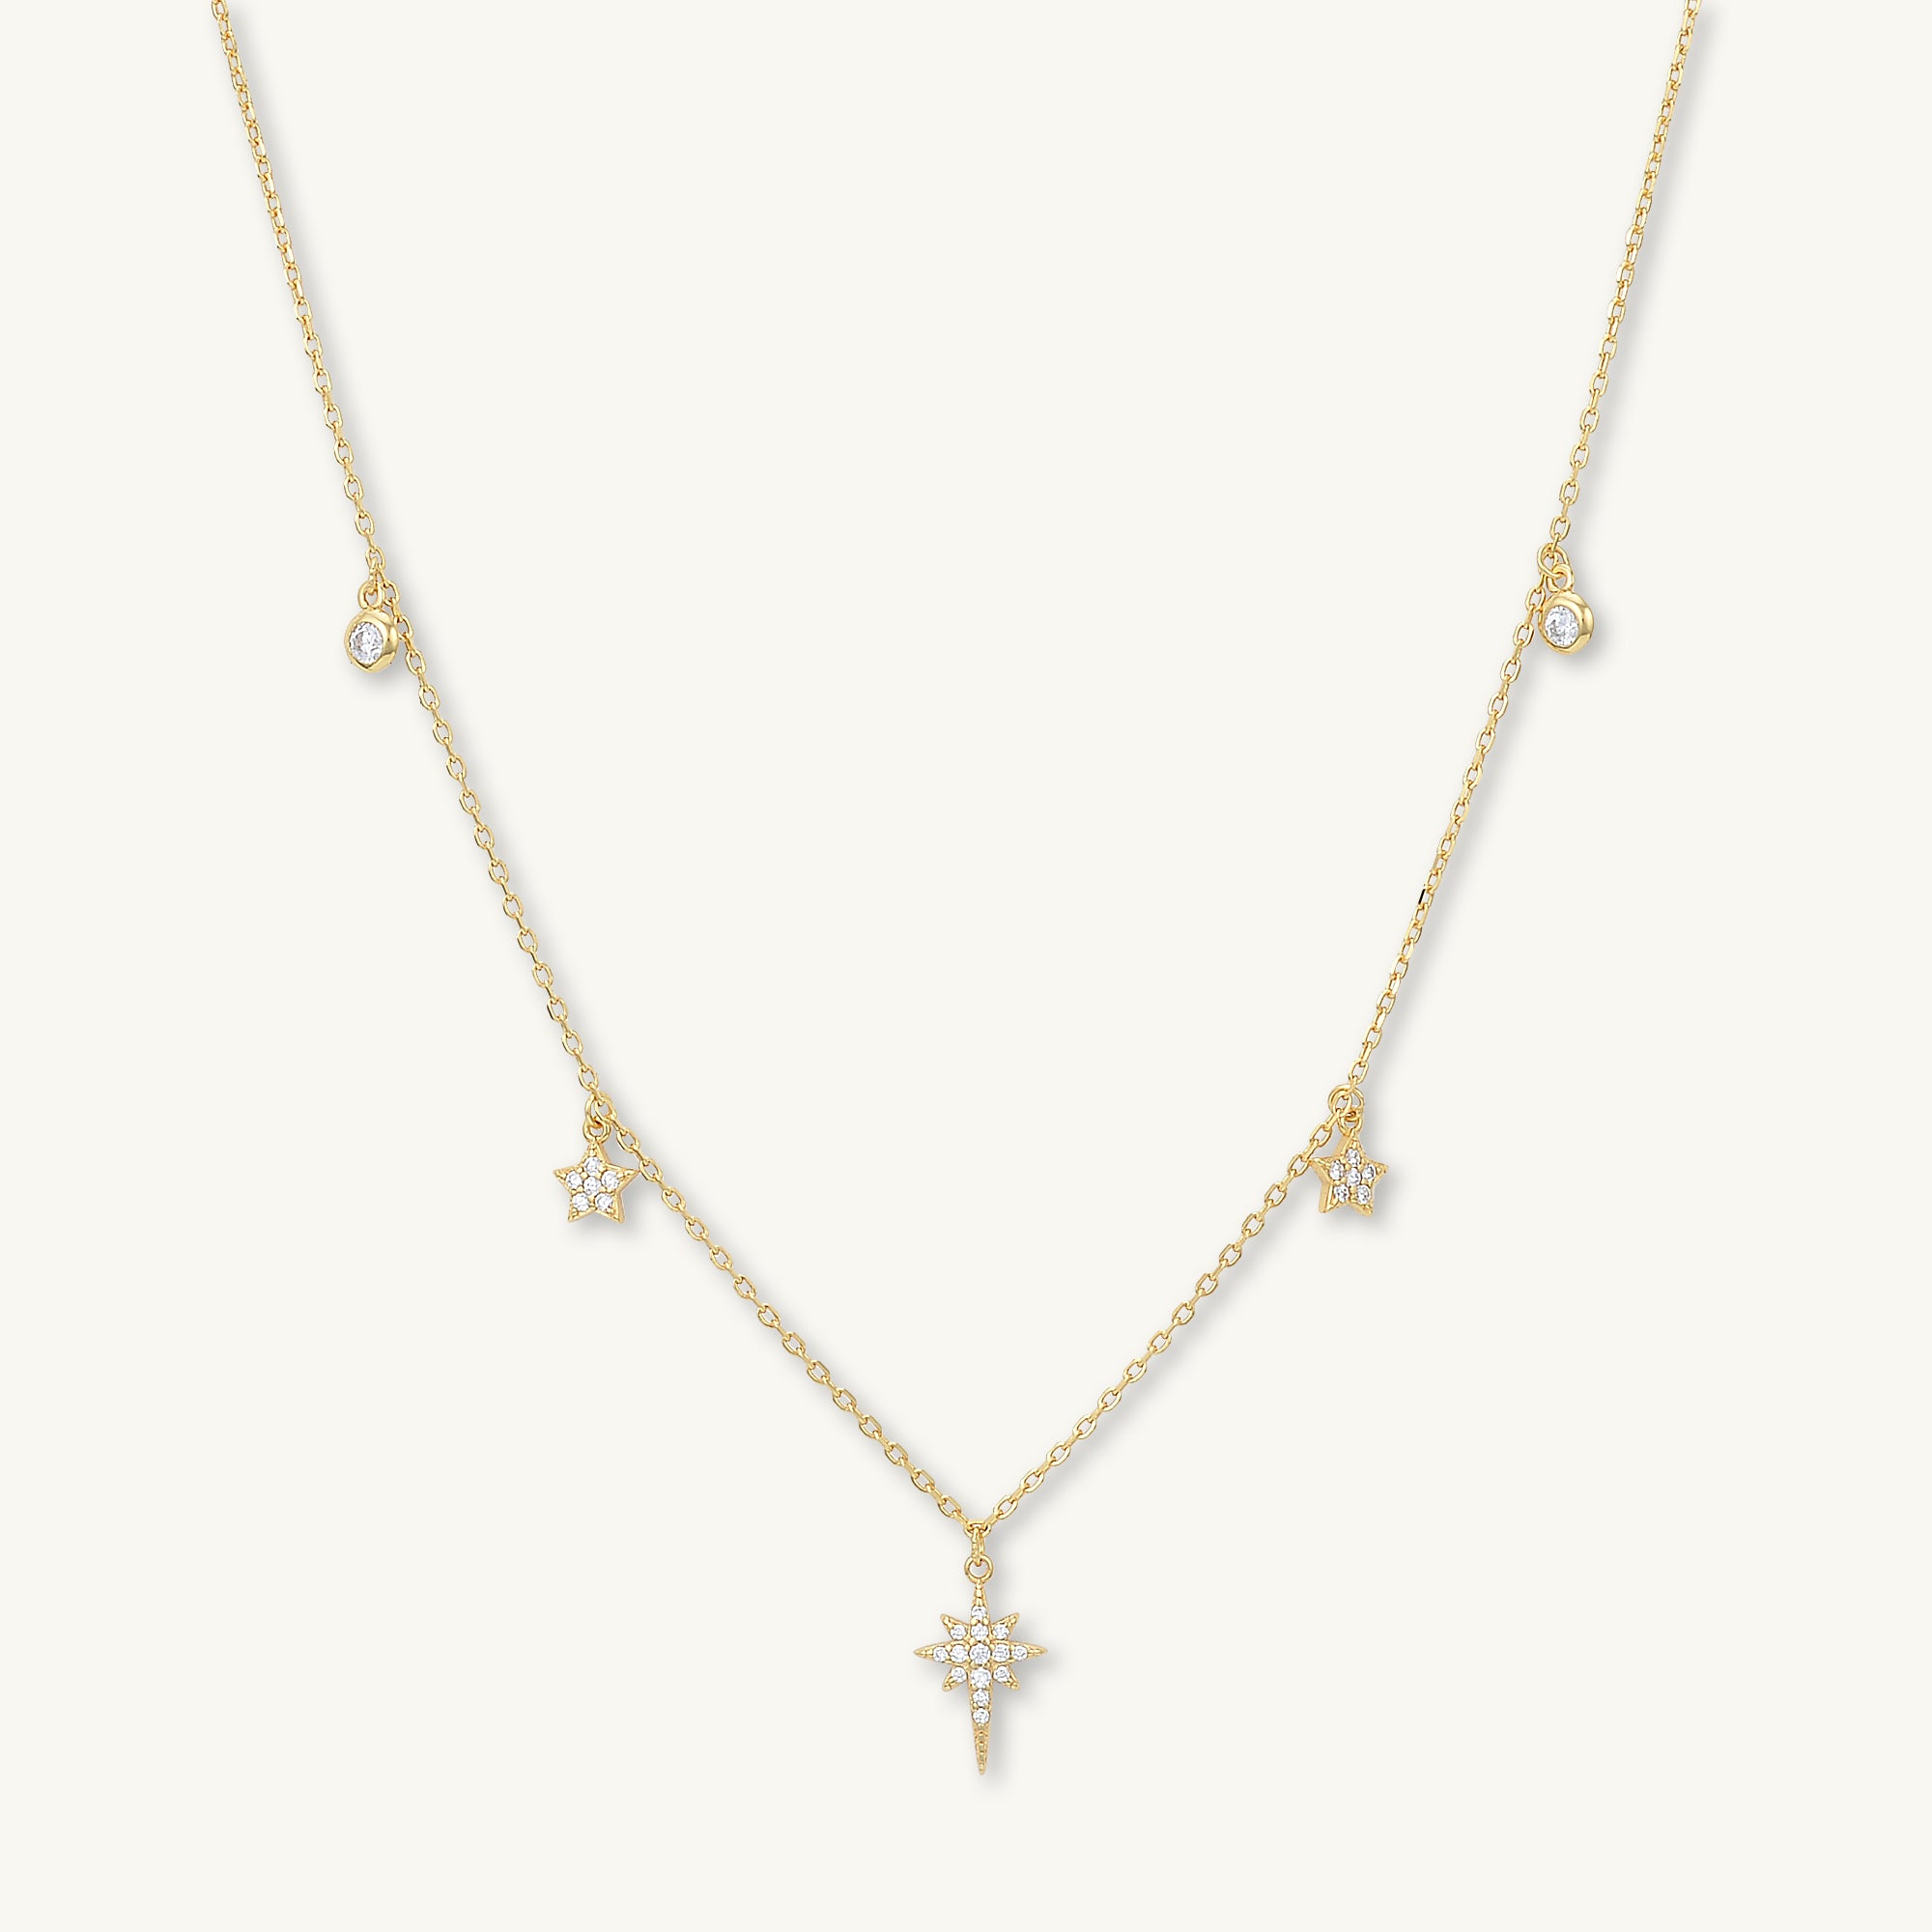 Bright North Star Sapphire Necklace